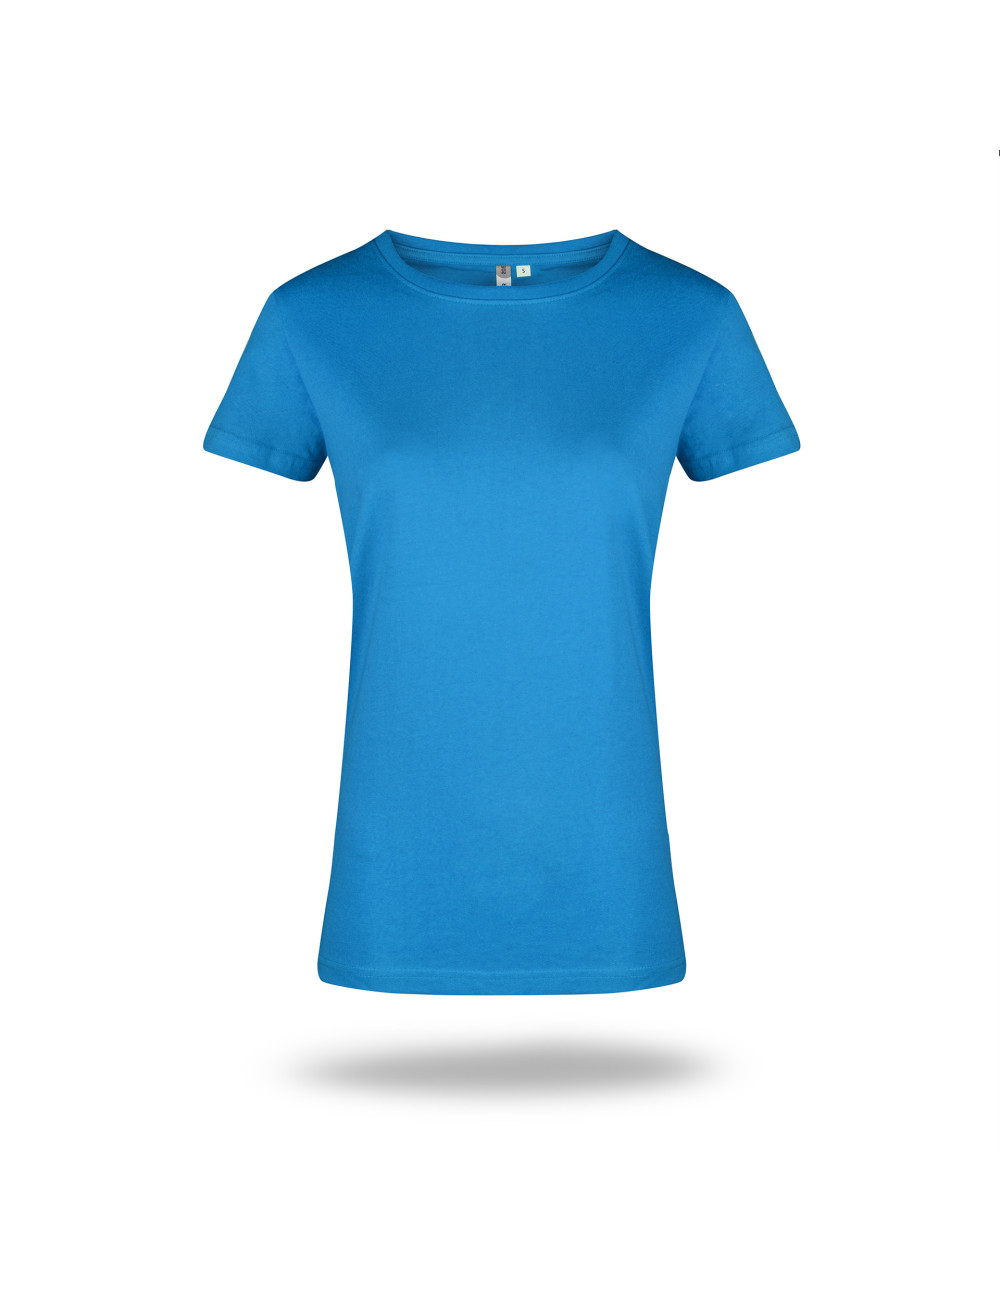 Damen T-Shirt 205 blau Geffer